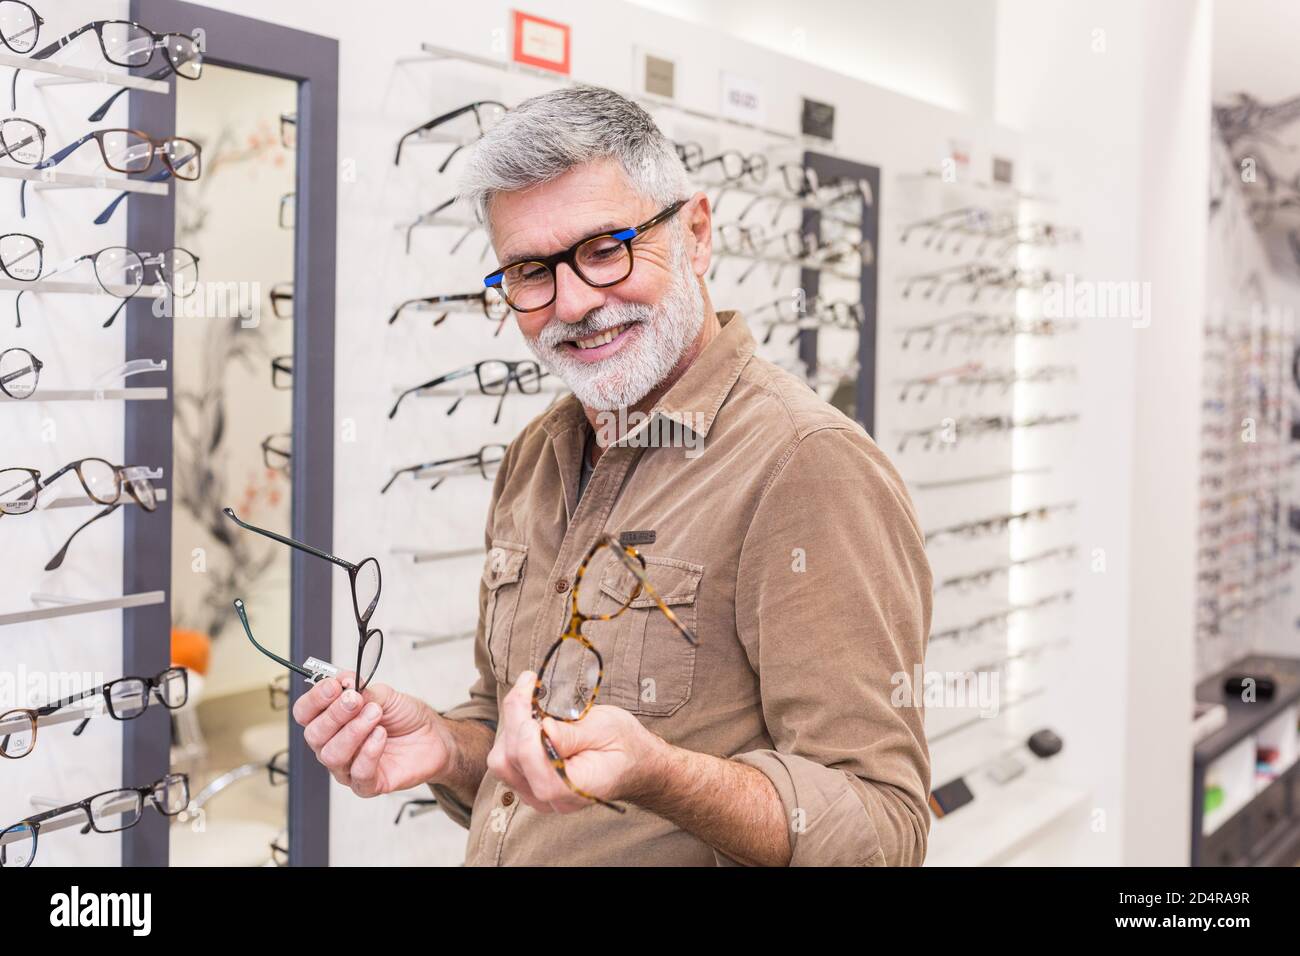 Man trying prescription glasses Stock Photo - Alamy